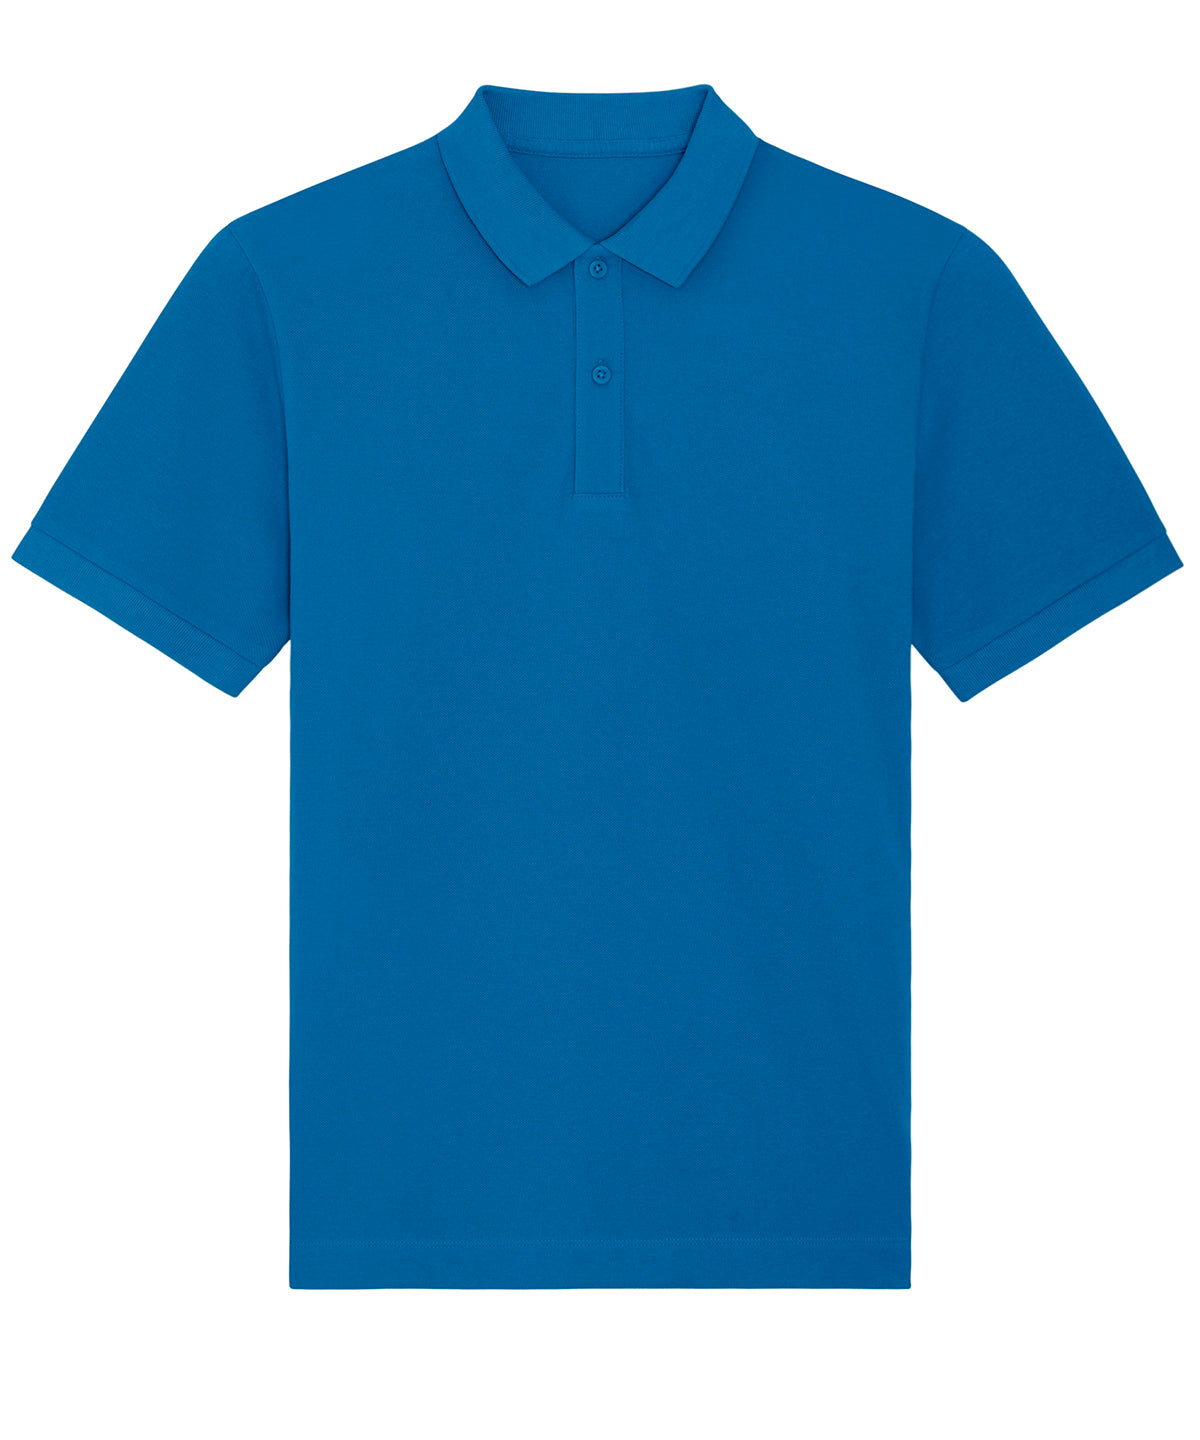 Stanley/Stella Prepster Unisex Short Sleeve Polo Royal Blue